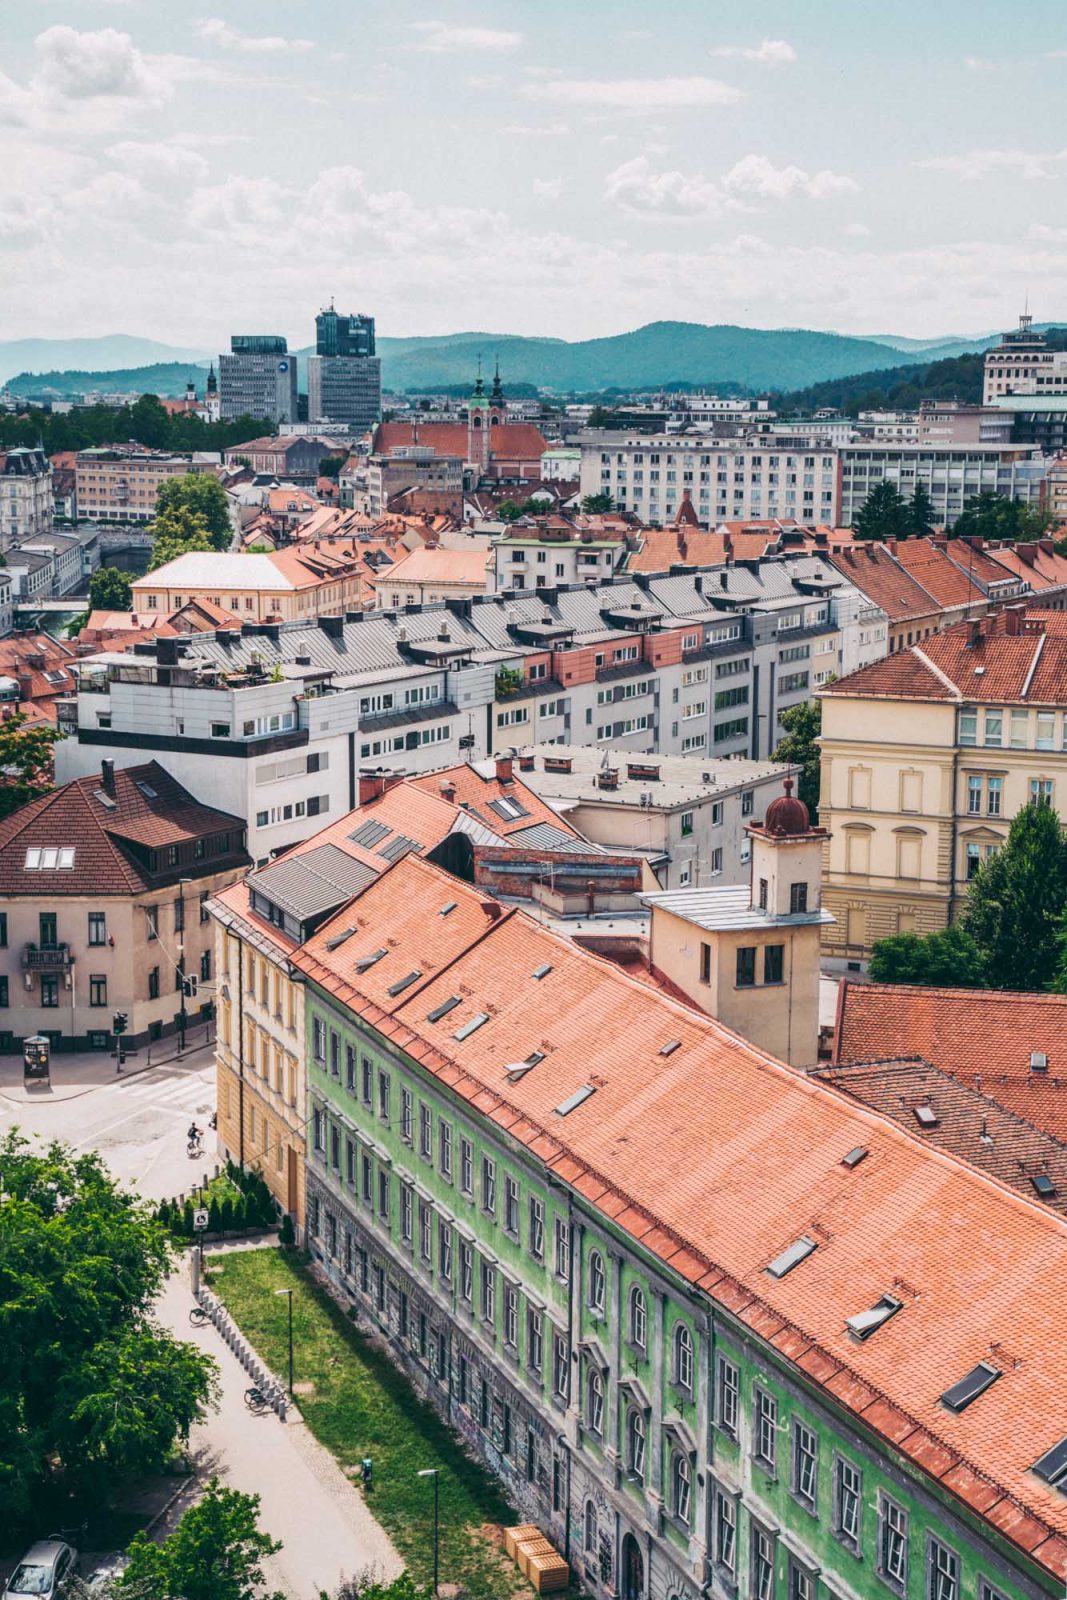 things to do in slovenia on holiday: Ljubljana